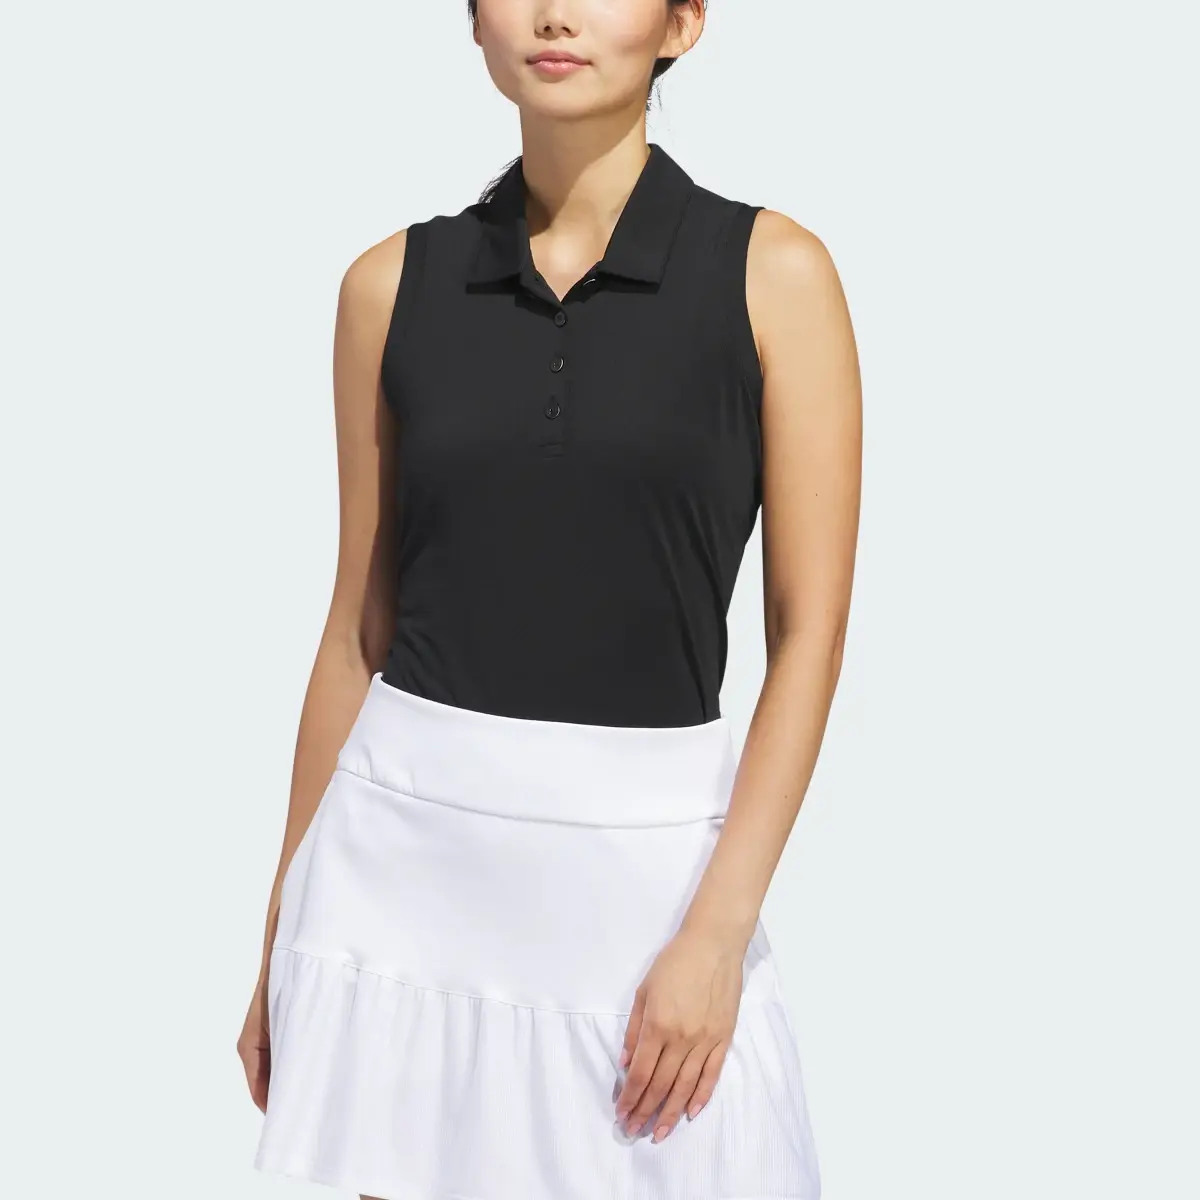 Adidas Women's Ultimate365 Solid Sleeveless Poloshirt. 1